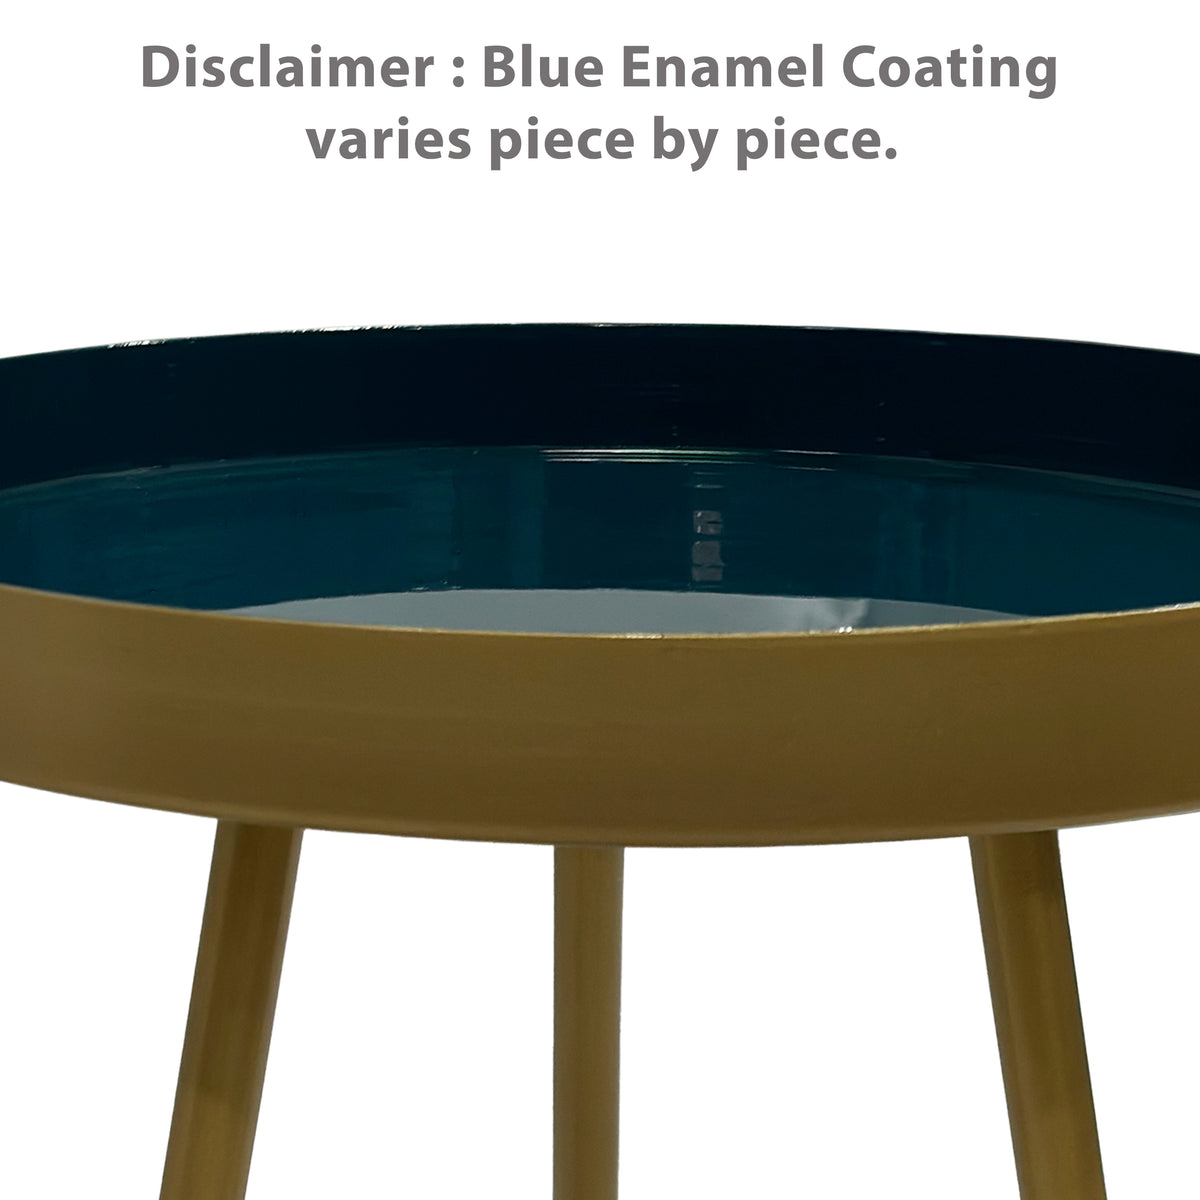 Enid 19 Inch Side End Table, Iron Brass Plating, Enamel Blue Top, Modern Sleek Angled Legs - UPT-297053